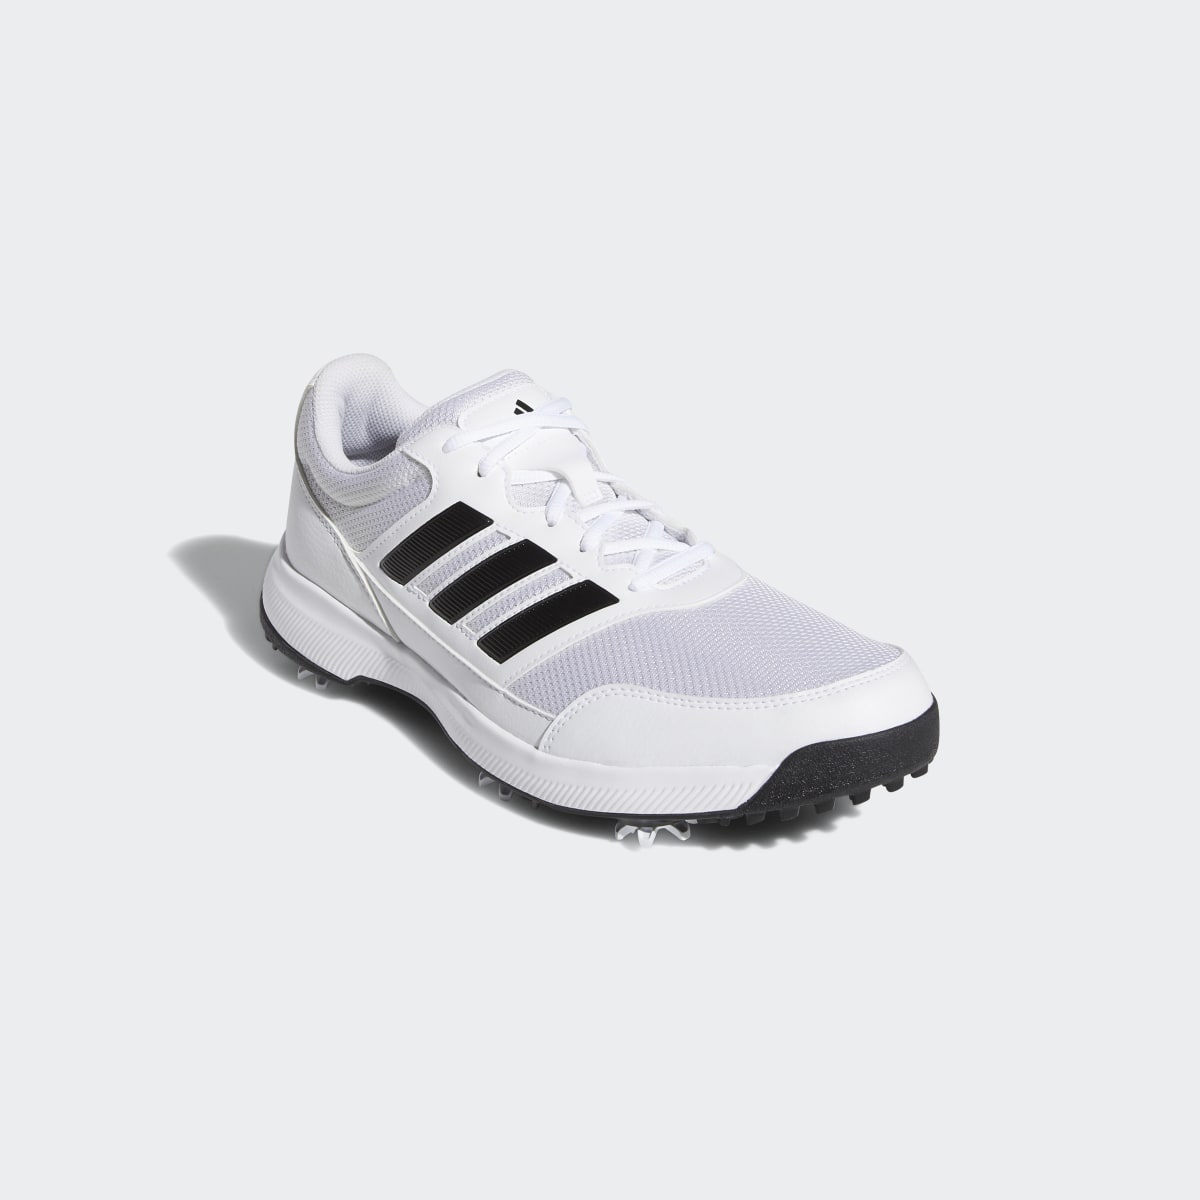 Adidas Tech Response 2.0 Golf Shoes. 6